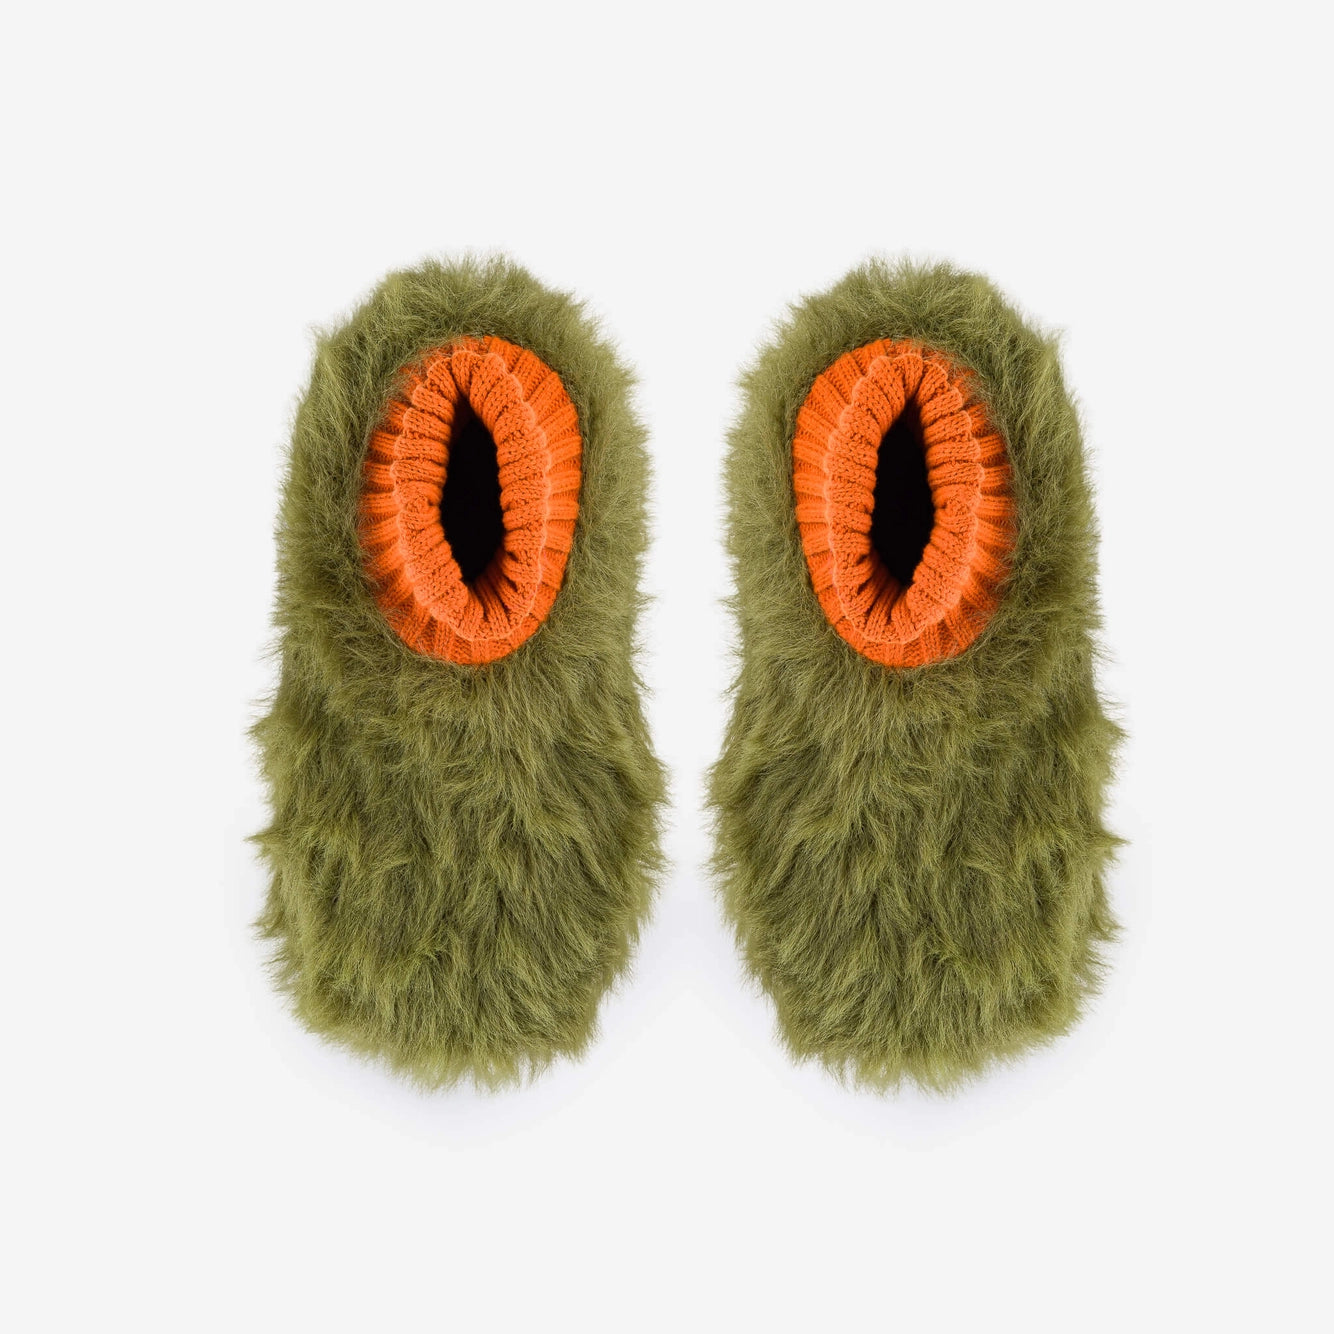 Moss Furry Sock Slippers